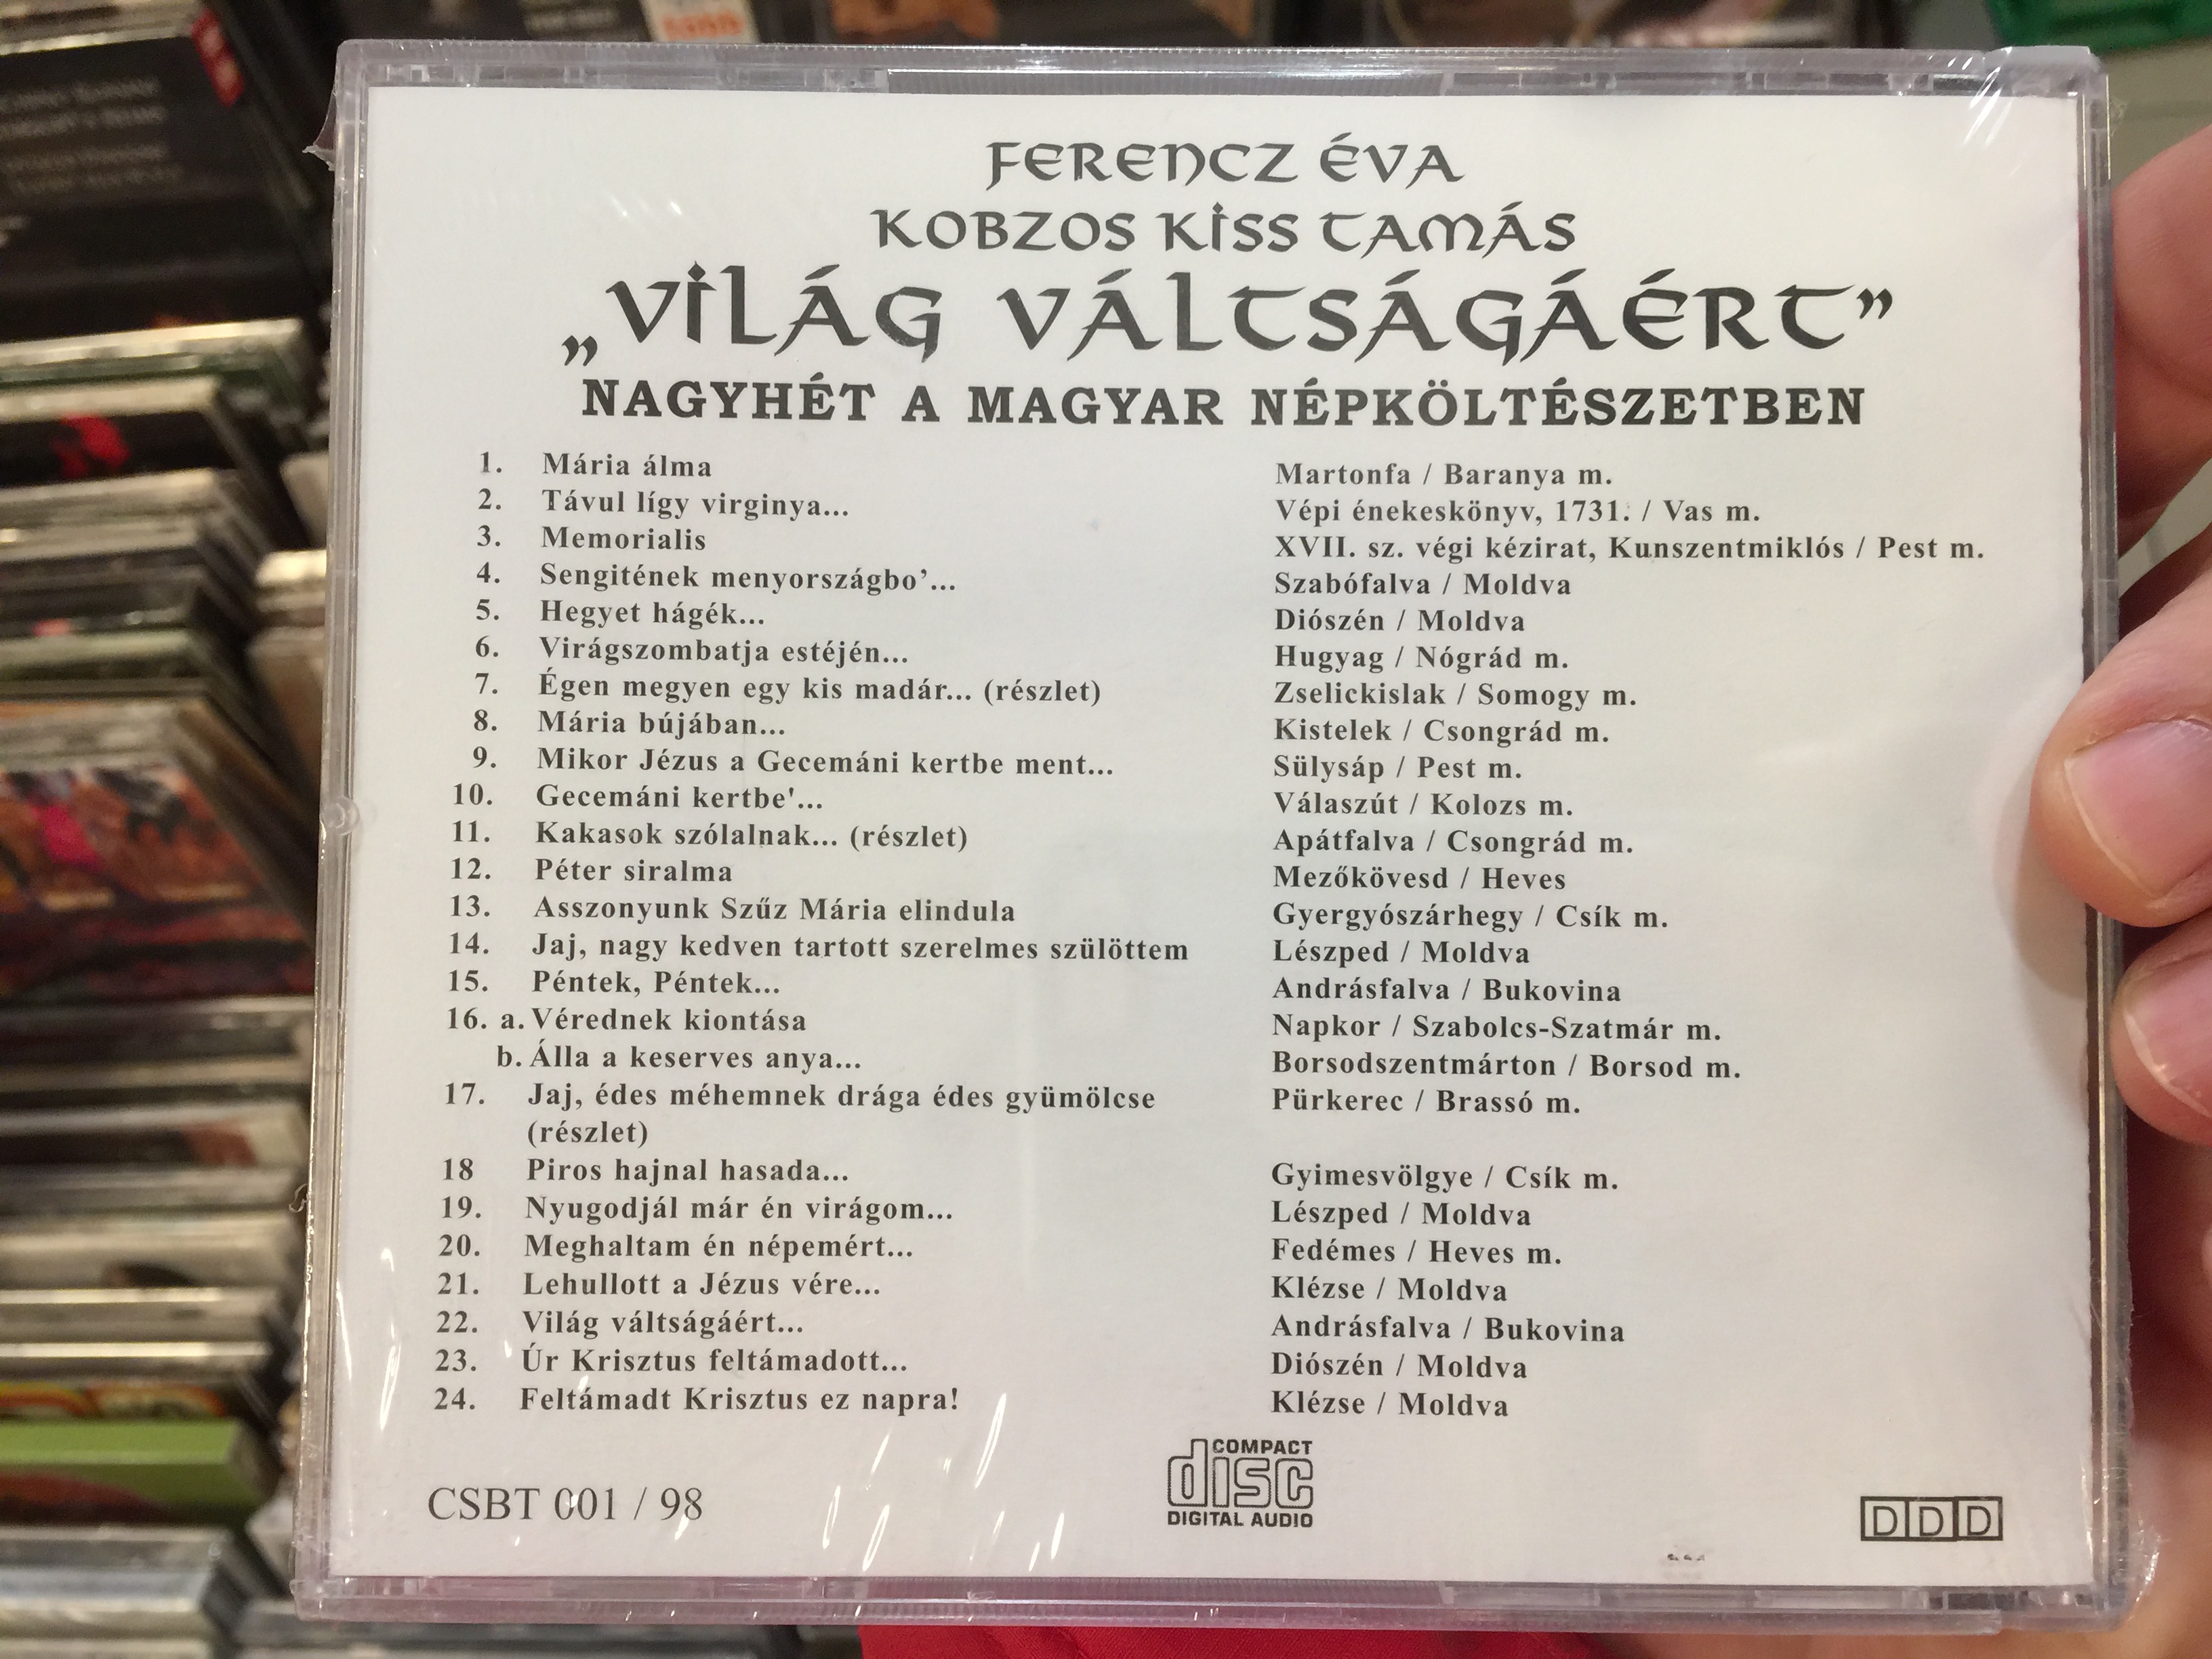 vil-g-v-lts-g-rt-ferencz-va-es-kobzos-kiss-tam-s-csillaghegyi-bt.-audio-cd-1998-csbt-001-98-2-.jpg